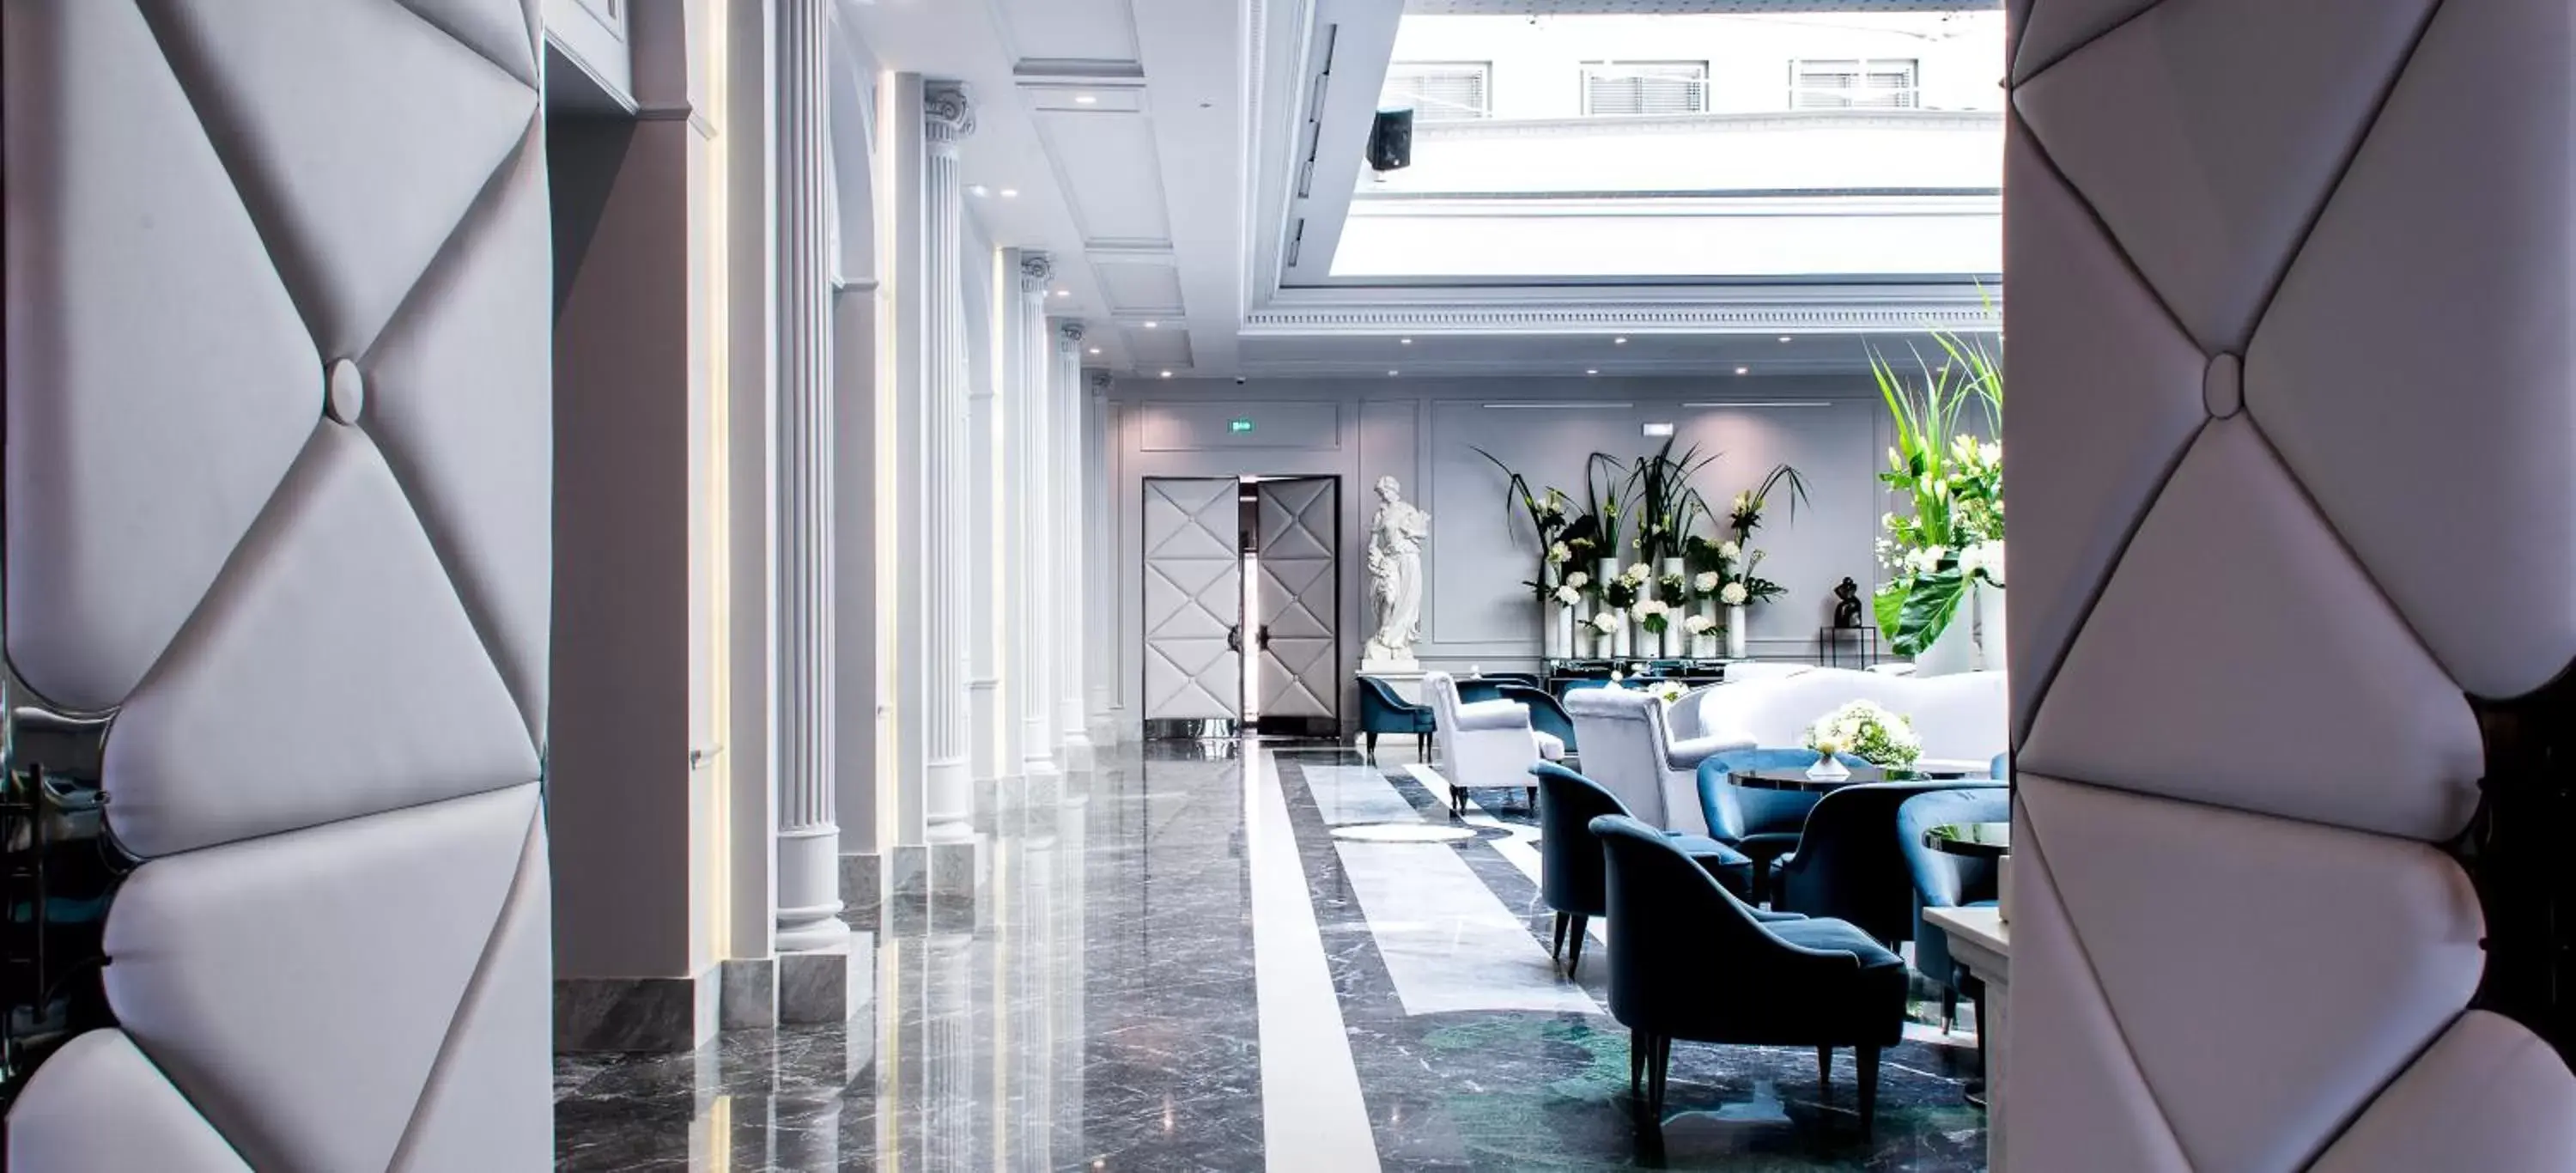 Lobby or reception in Boscolo Lyon Hotel & Spa